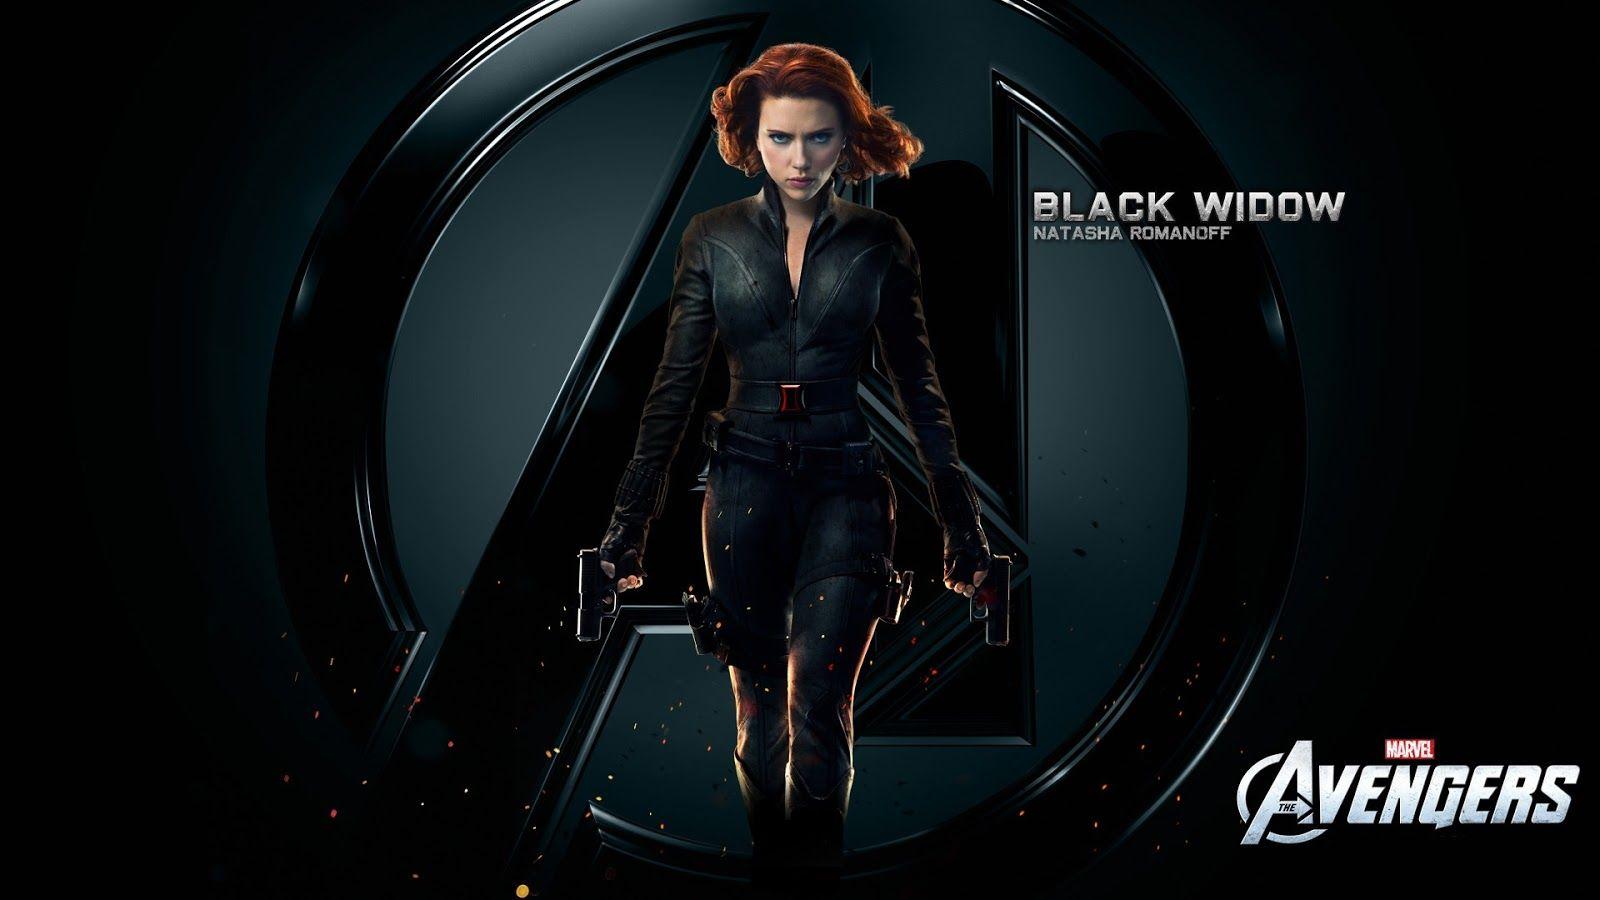 Avengers Wallpaper, Movie Image. Black widow movie, Black widow